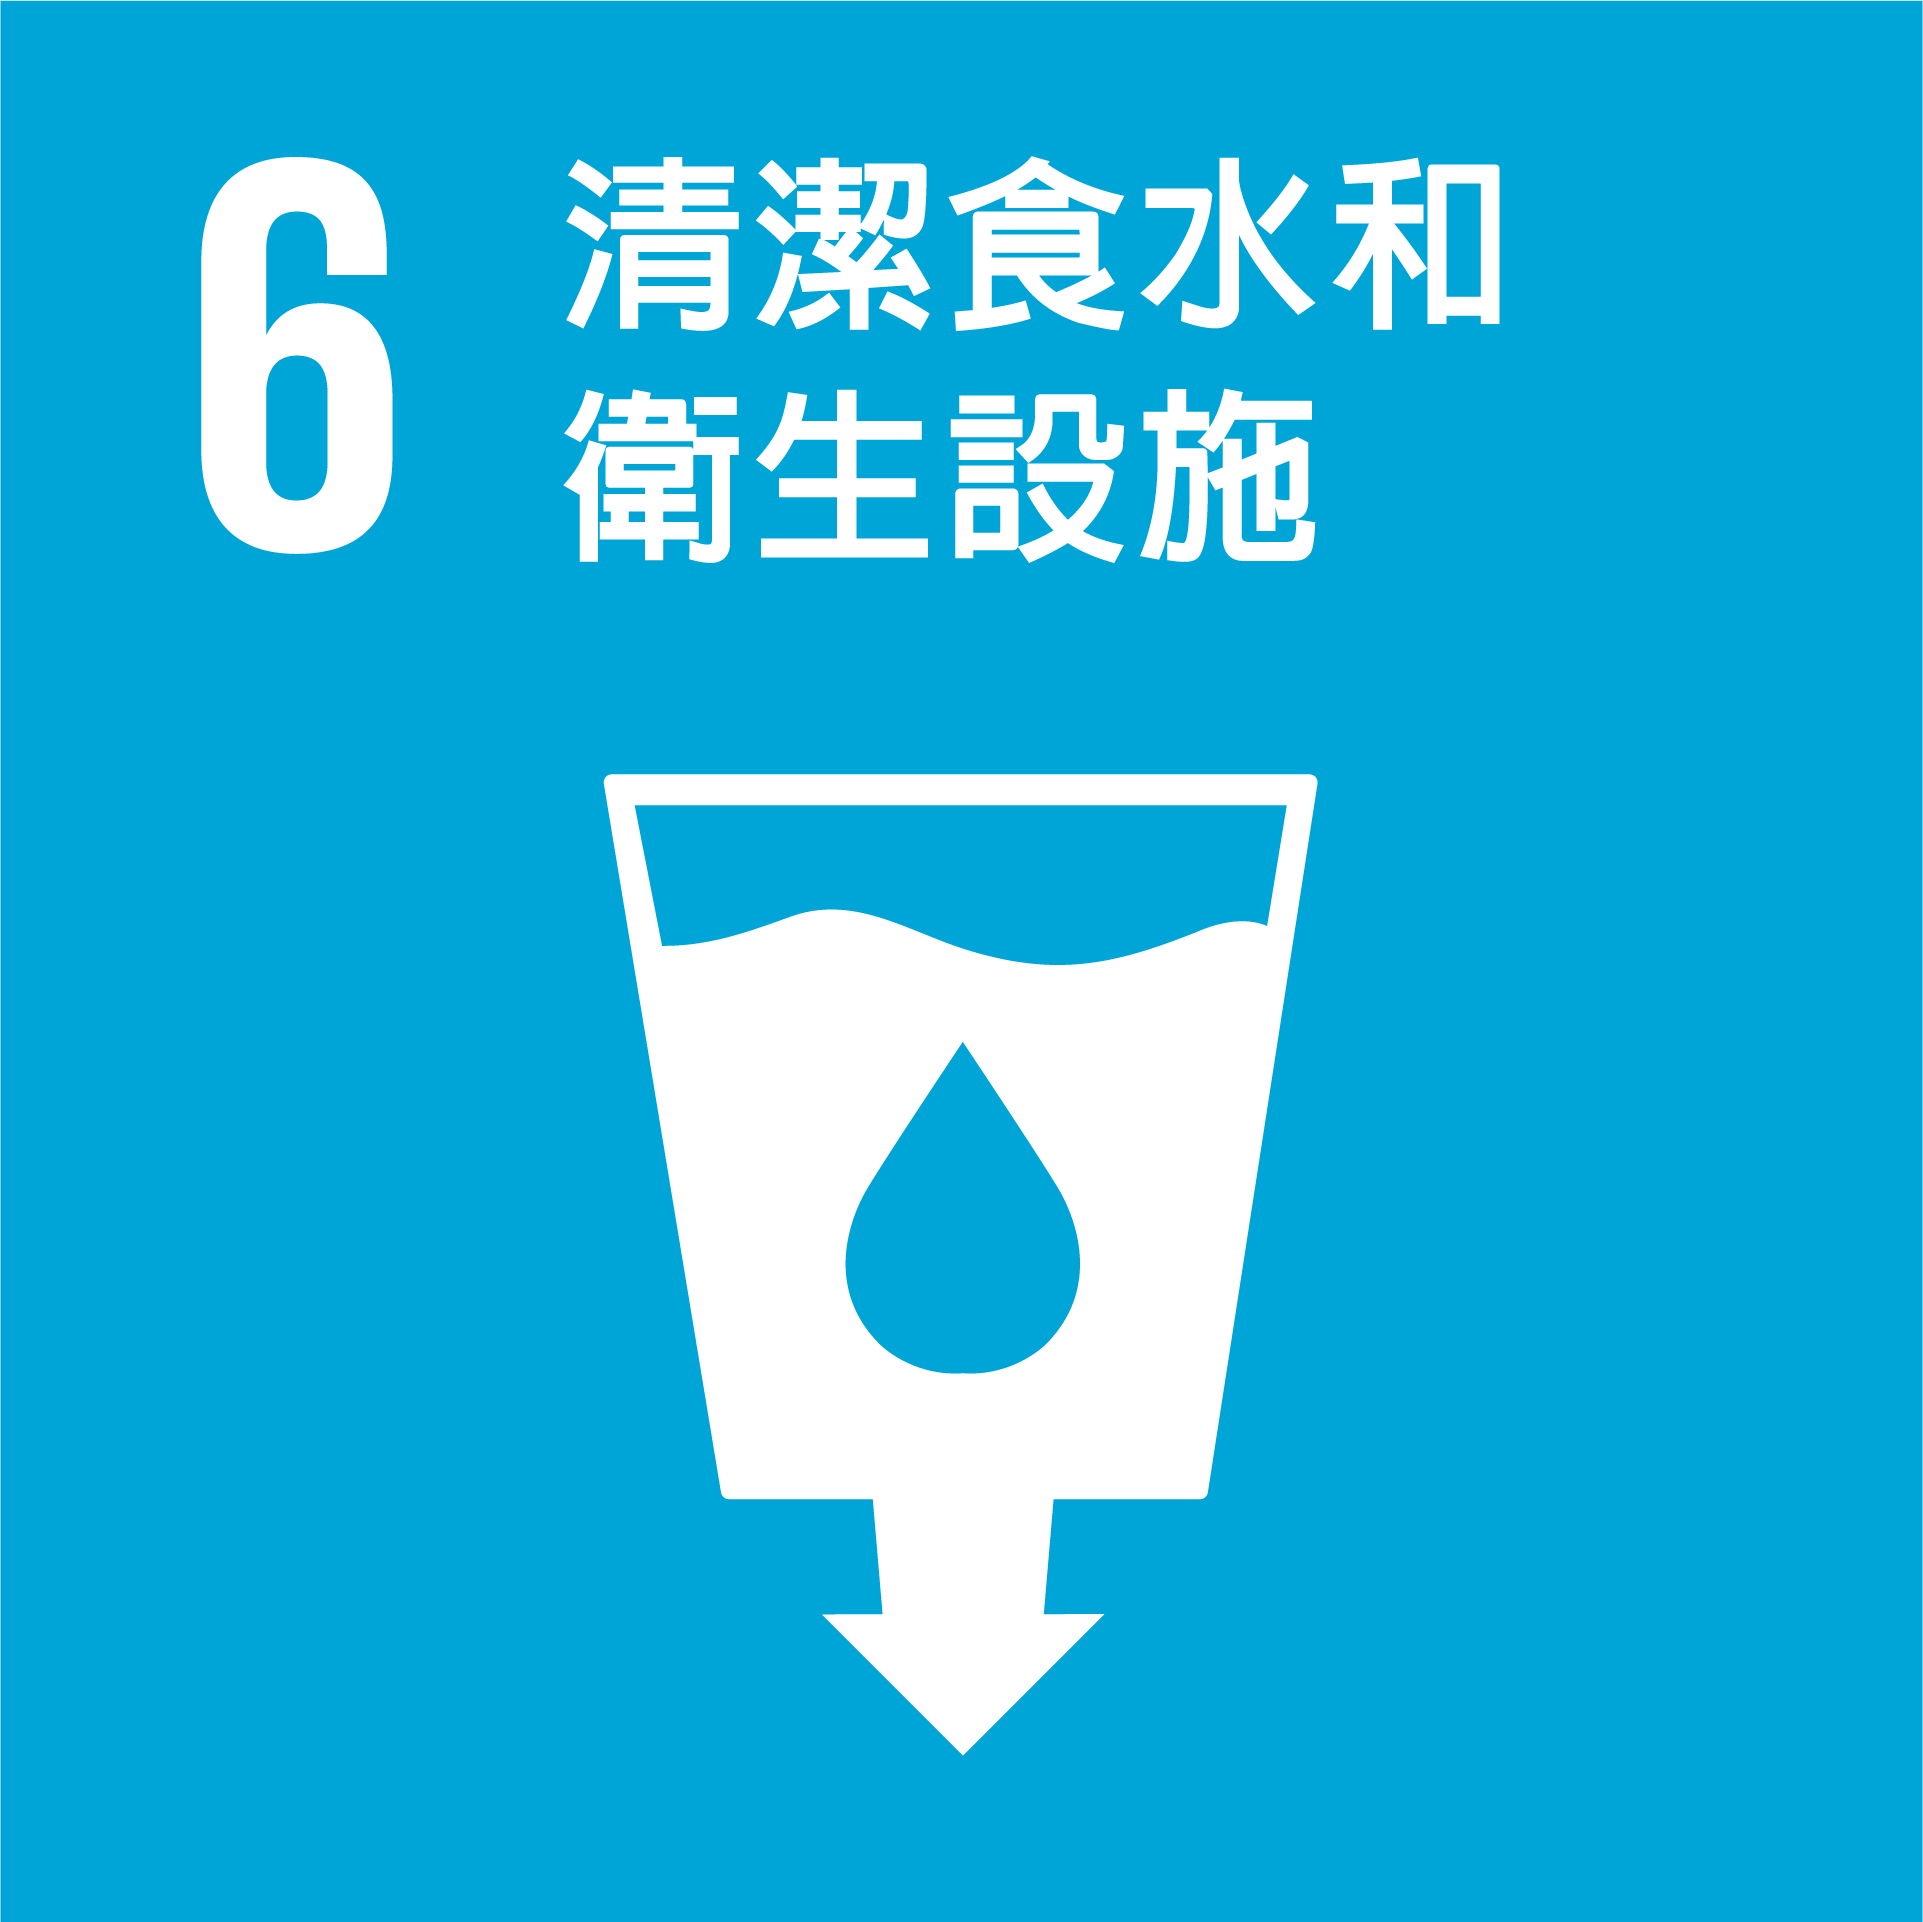 SDG vertical logo icons Chi 06